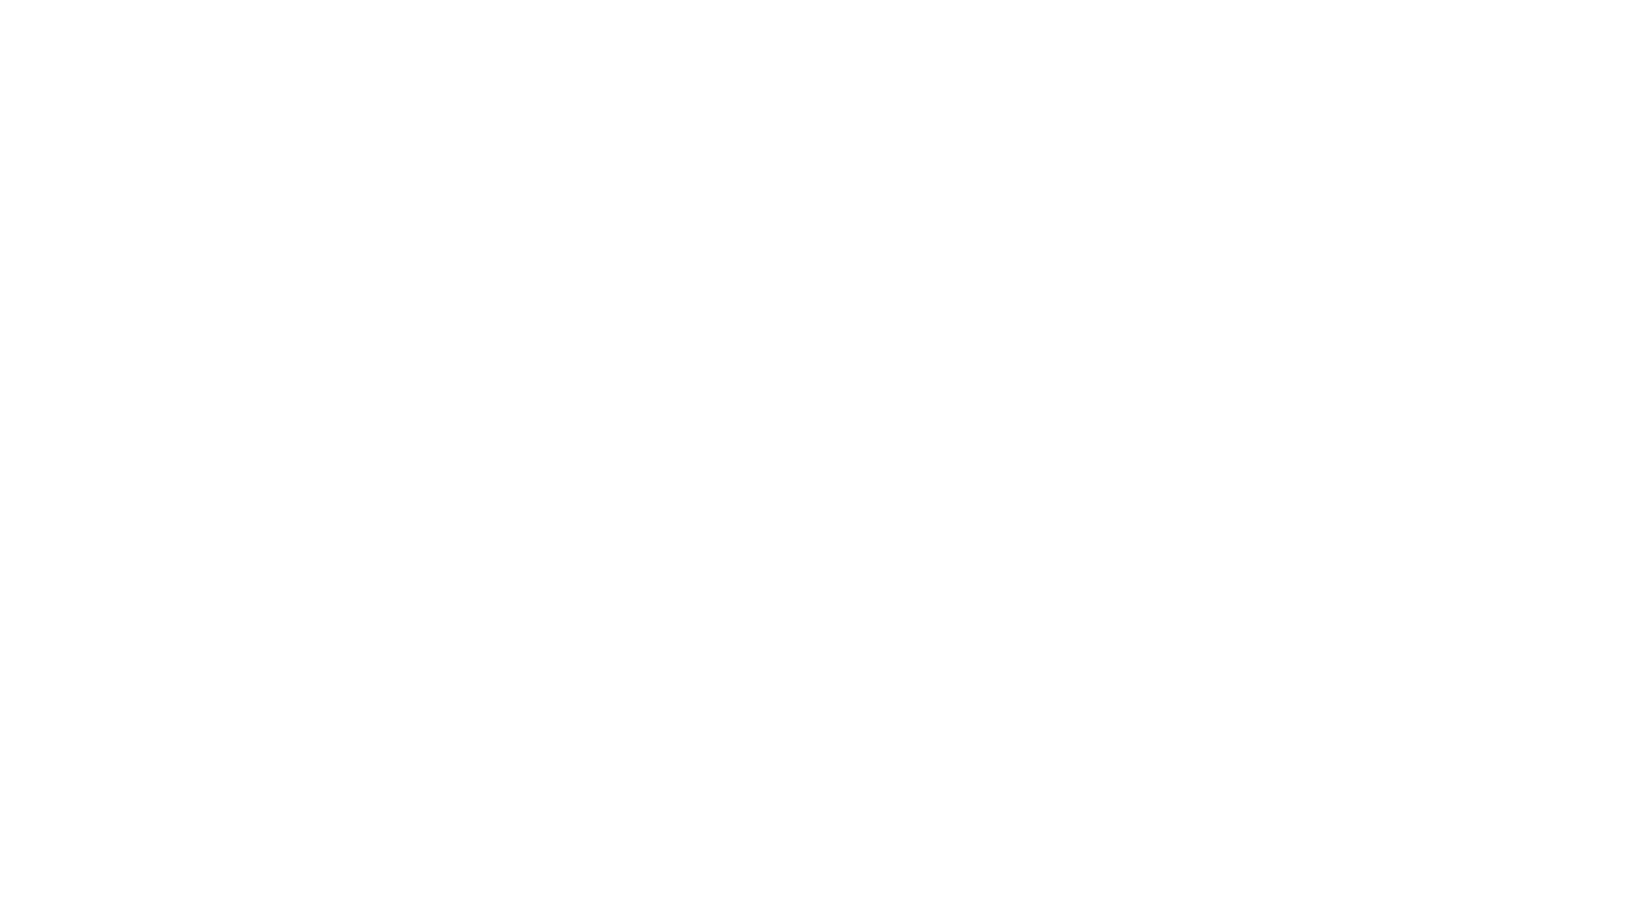 littleBULL Productions